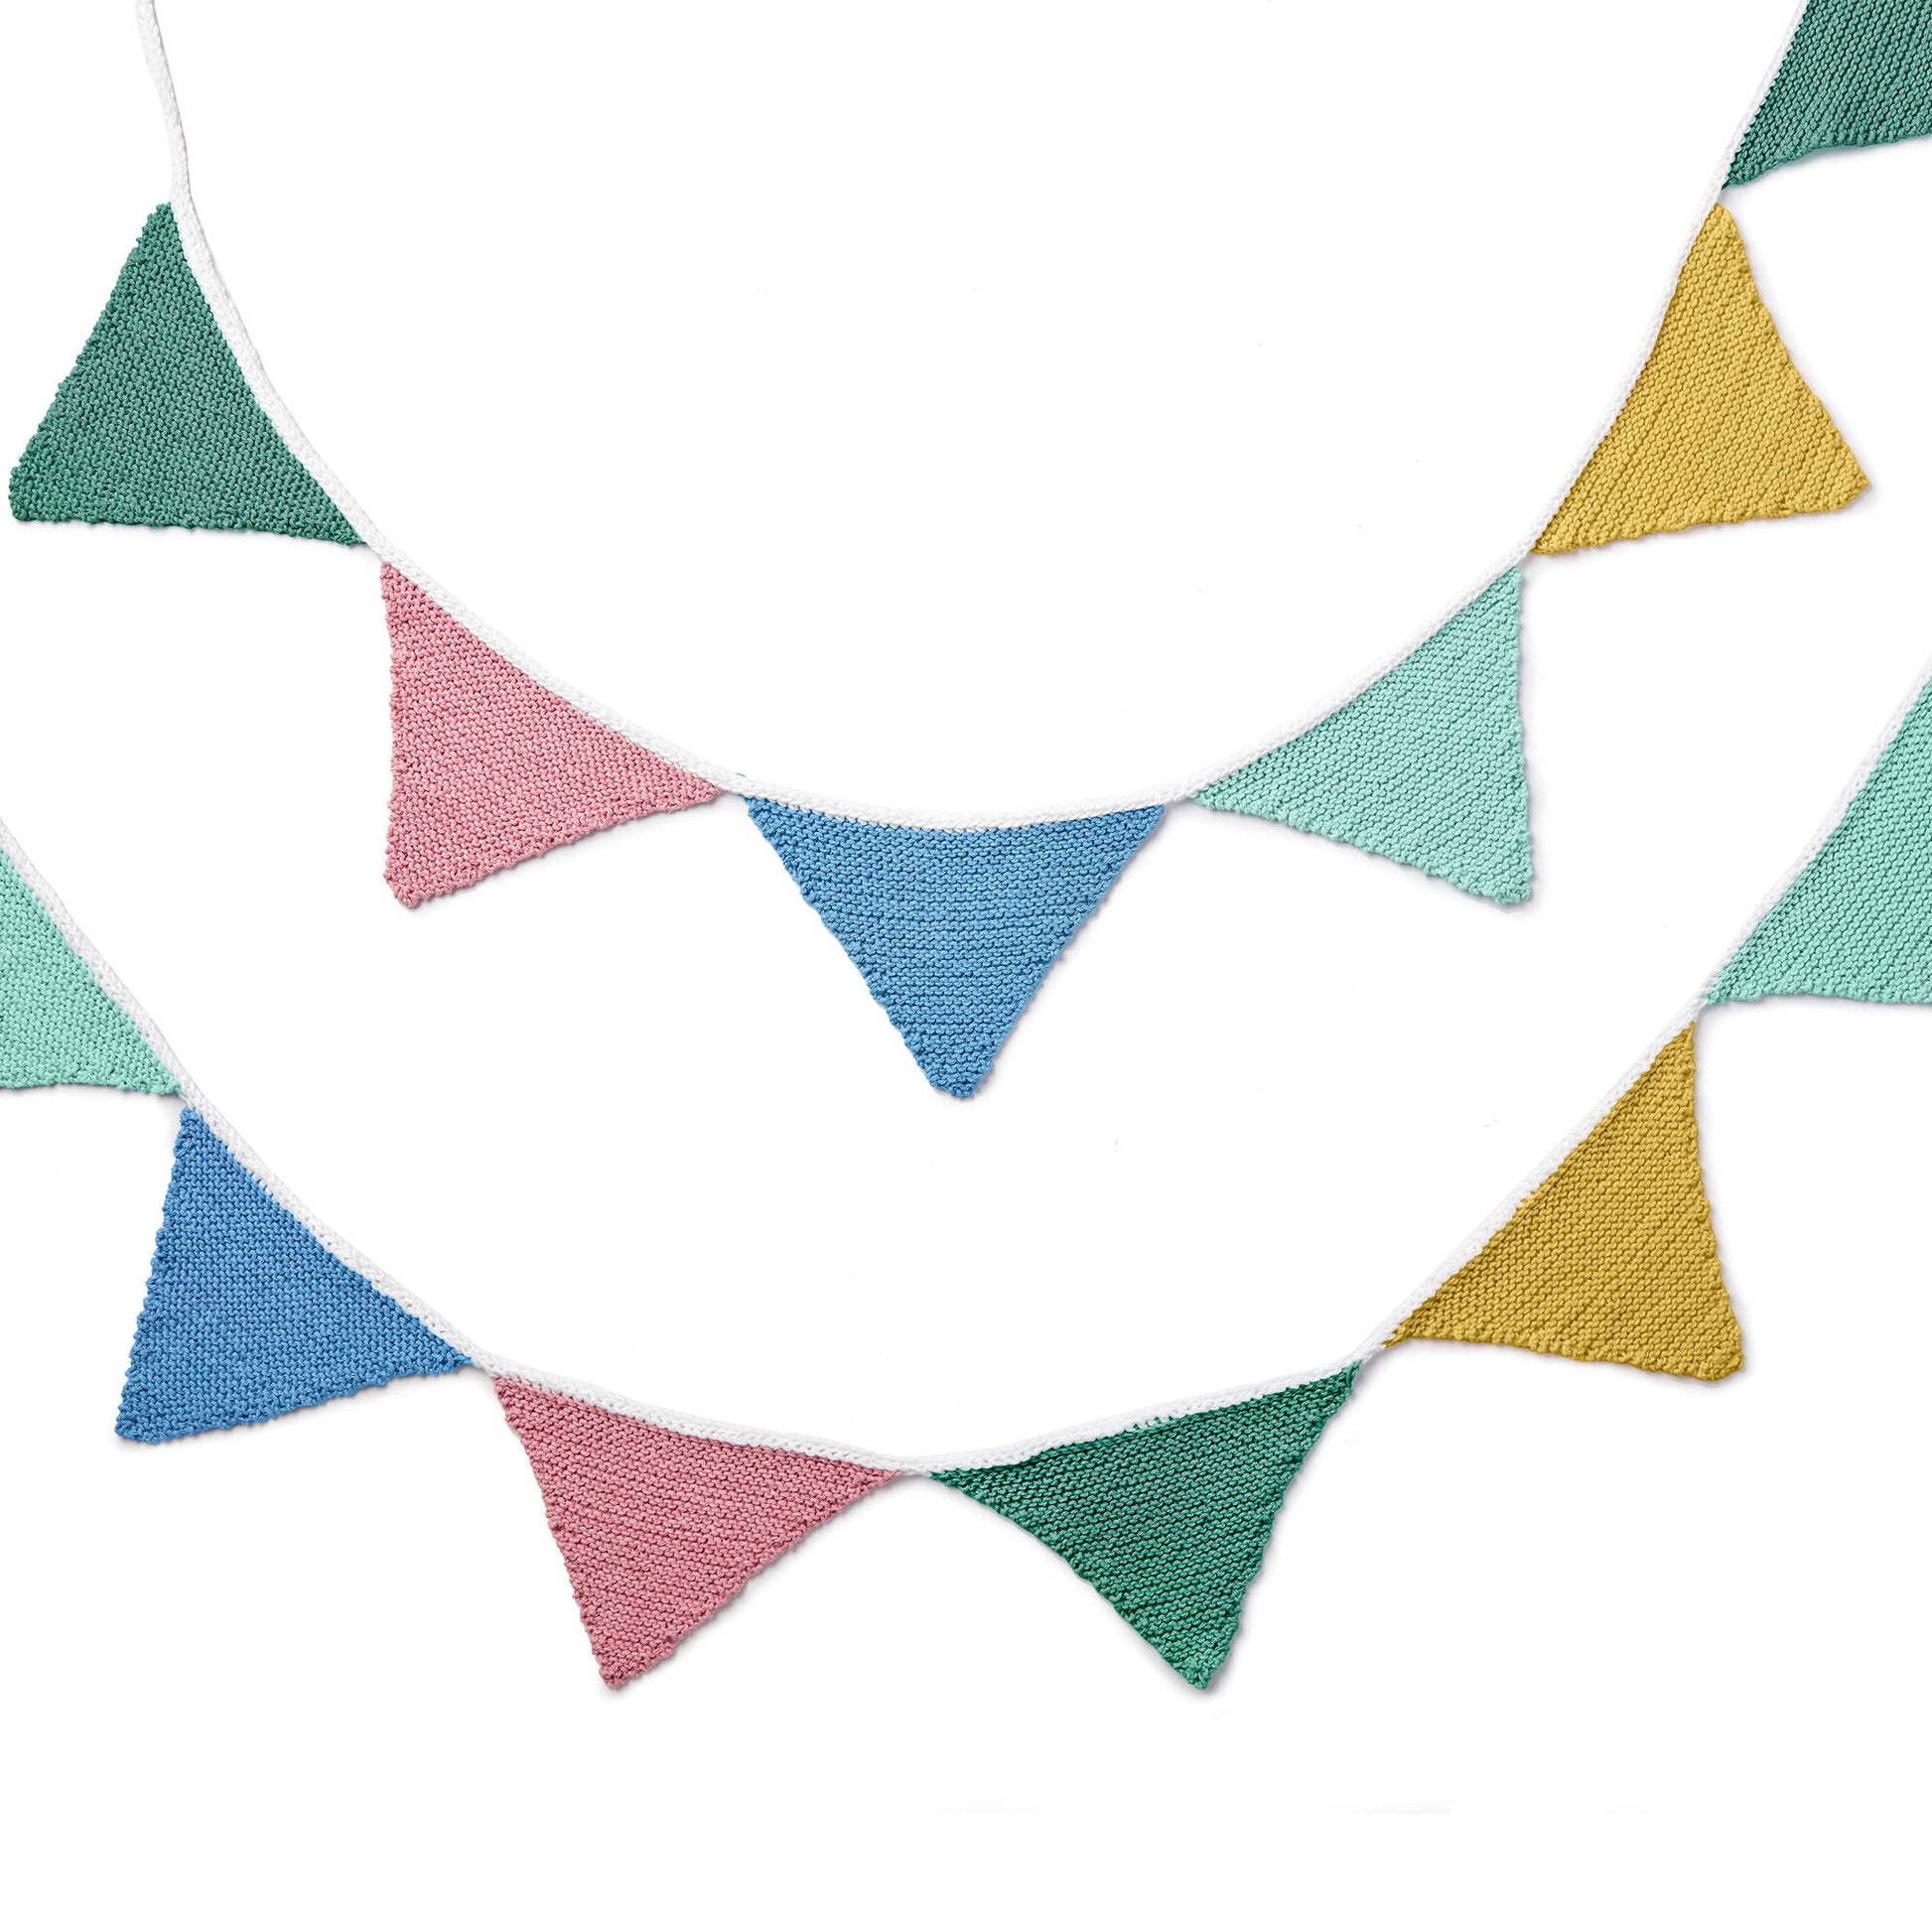 Free Lily Sugar'n Cream Garter Triangle Knit Bunting Pattern